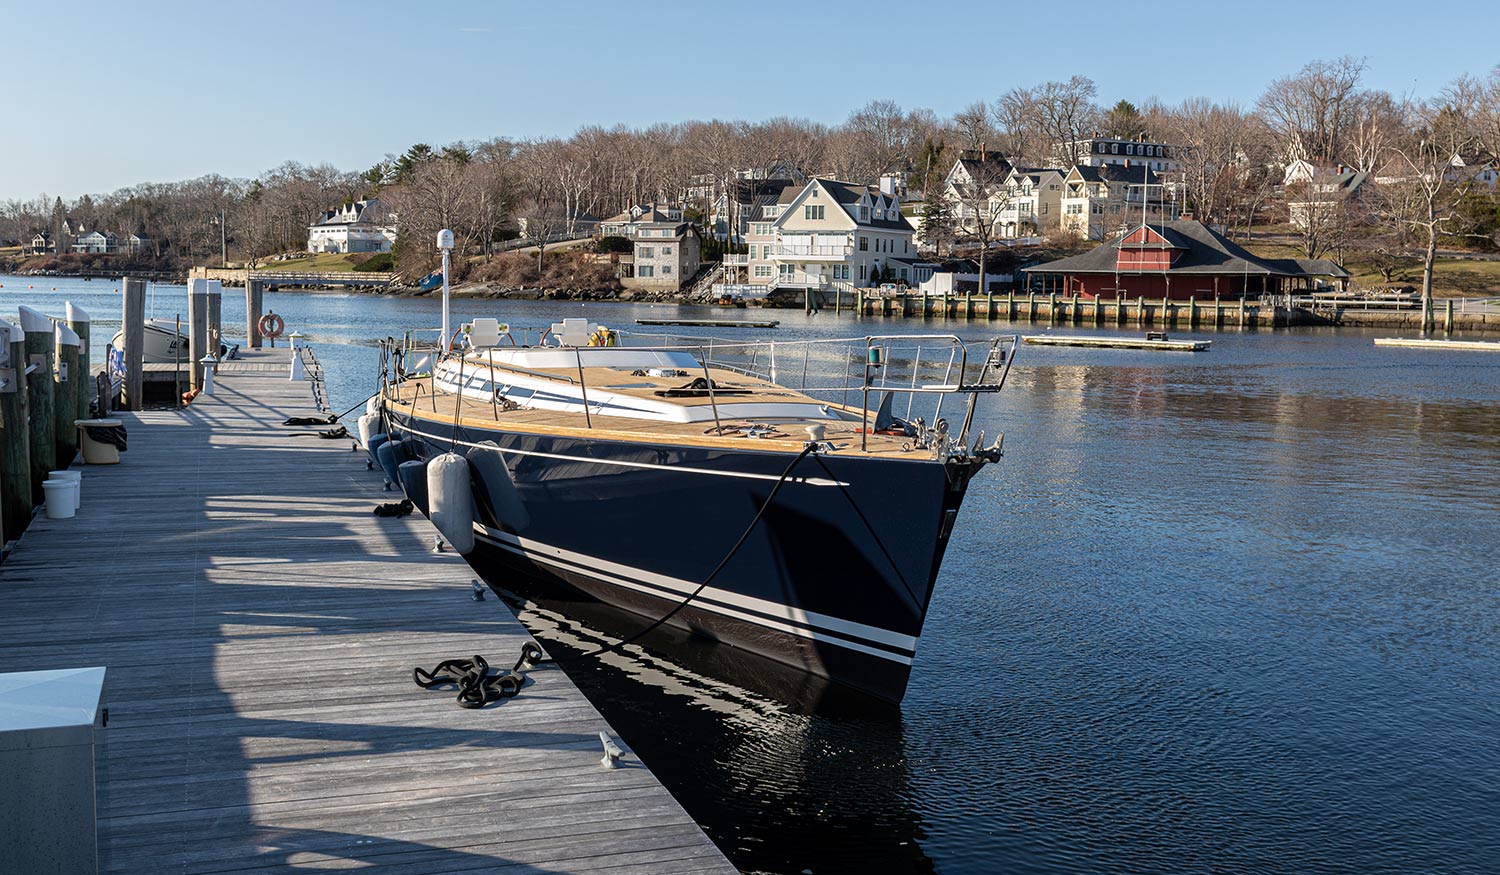 Atem's newly refurbished decks shine in the spring sun